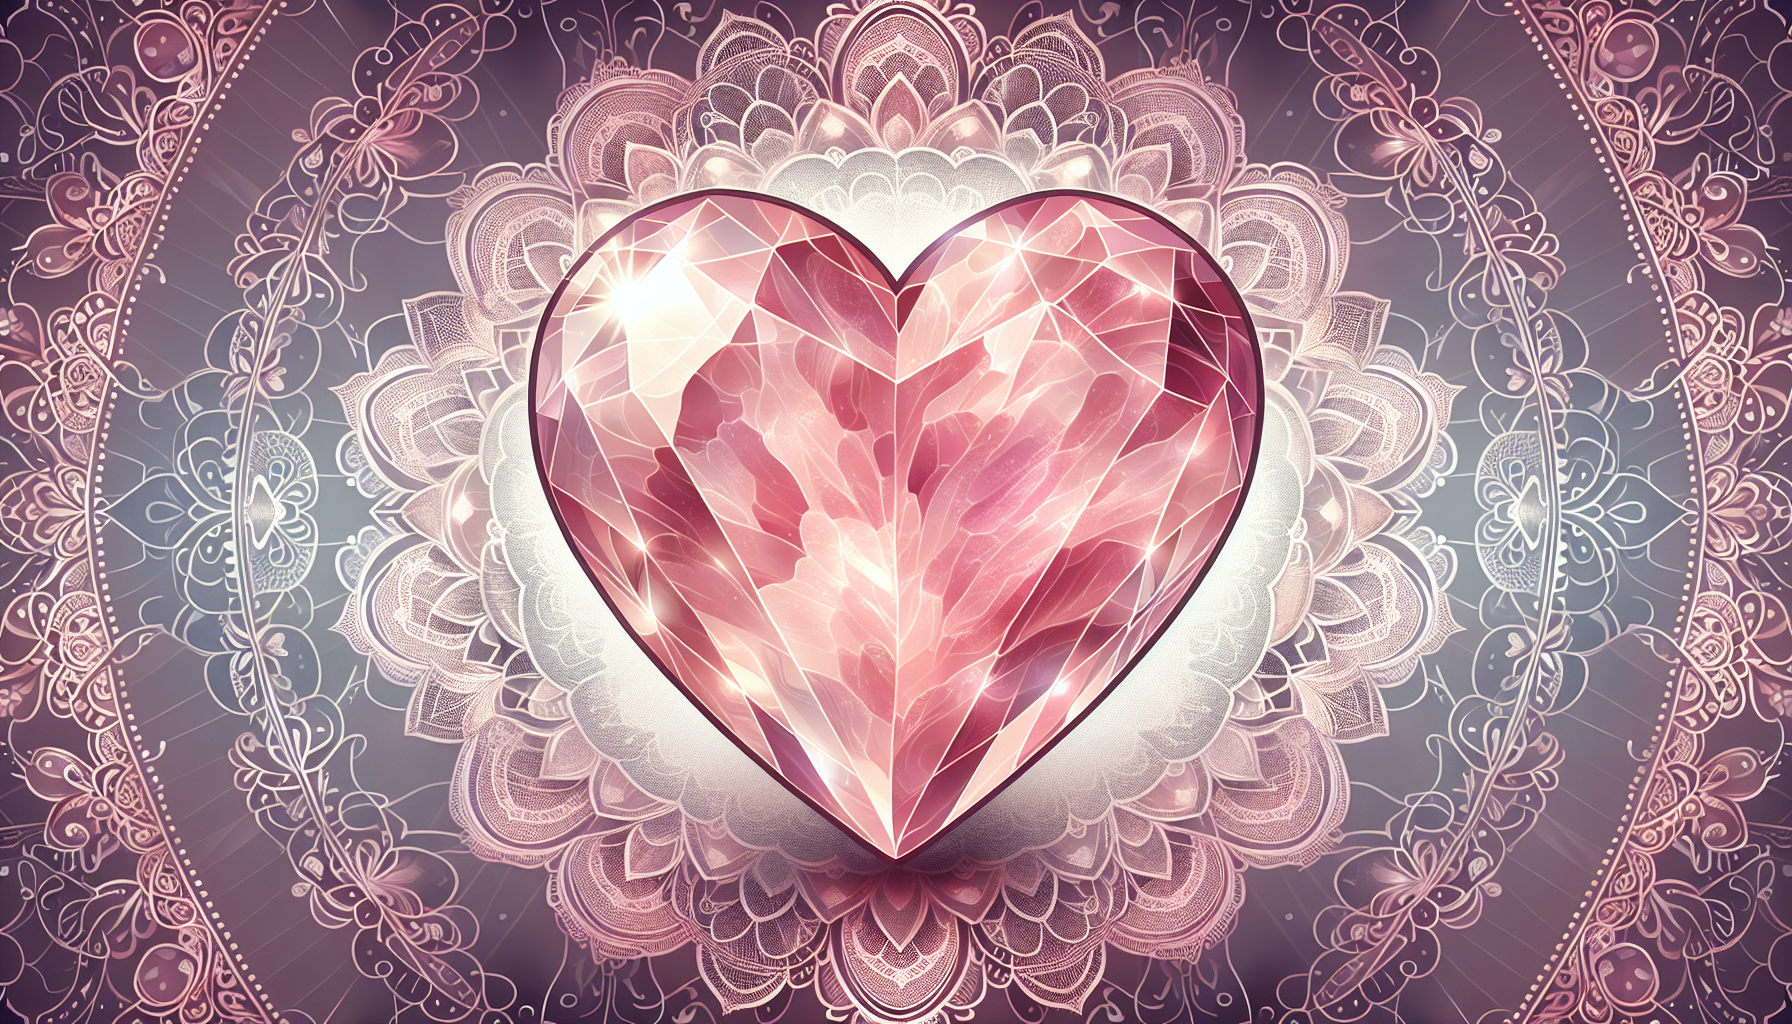 Illustration of a rose quartz heart symbolizing love and femininity